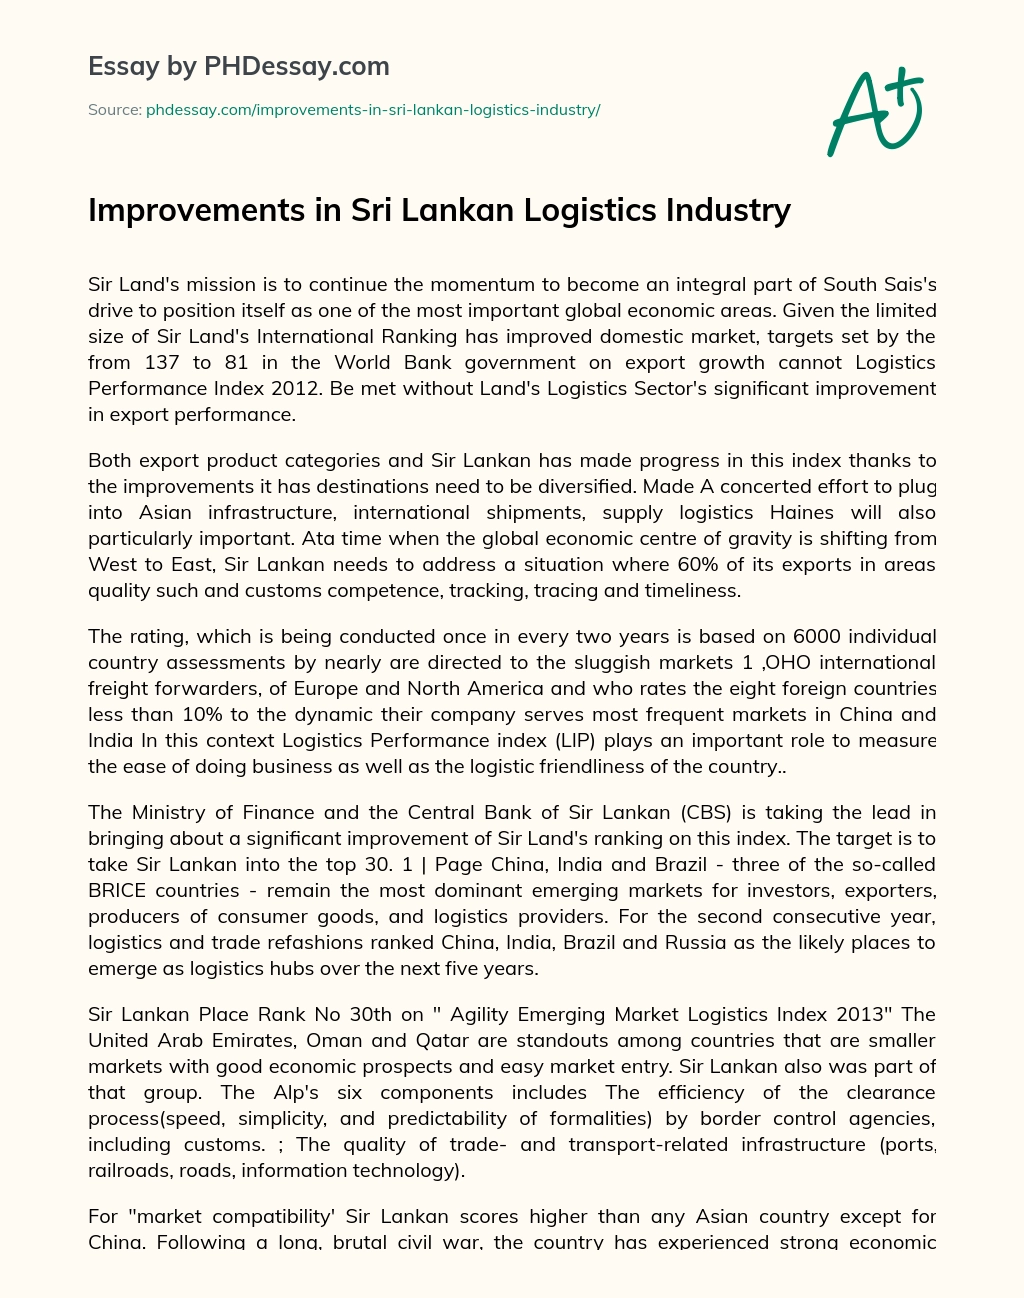 Improvements in Sri Lankan Logistics Industry essay